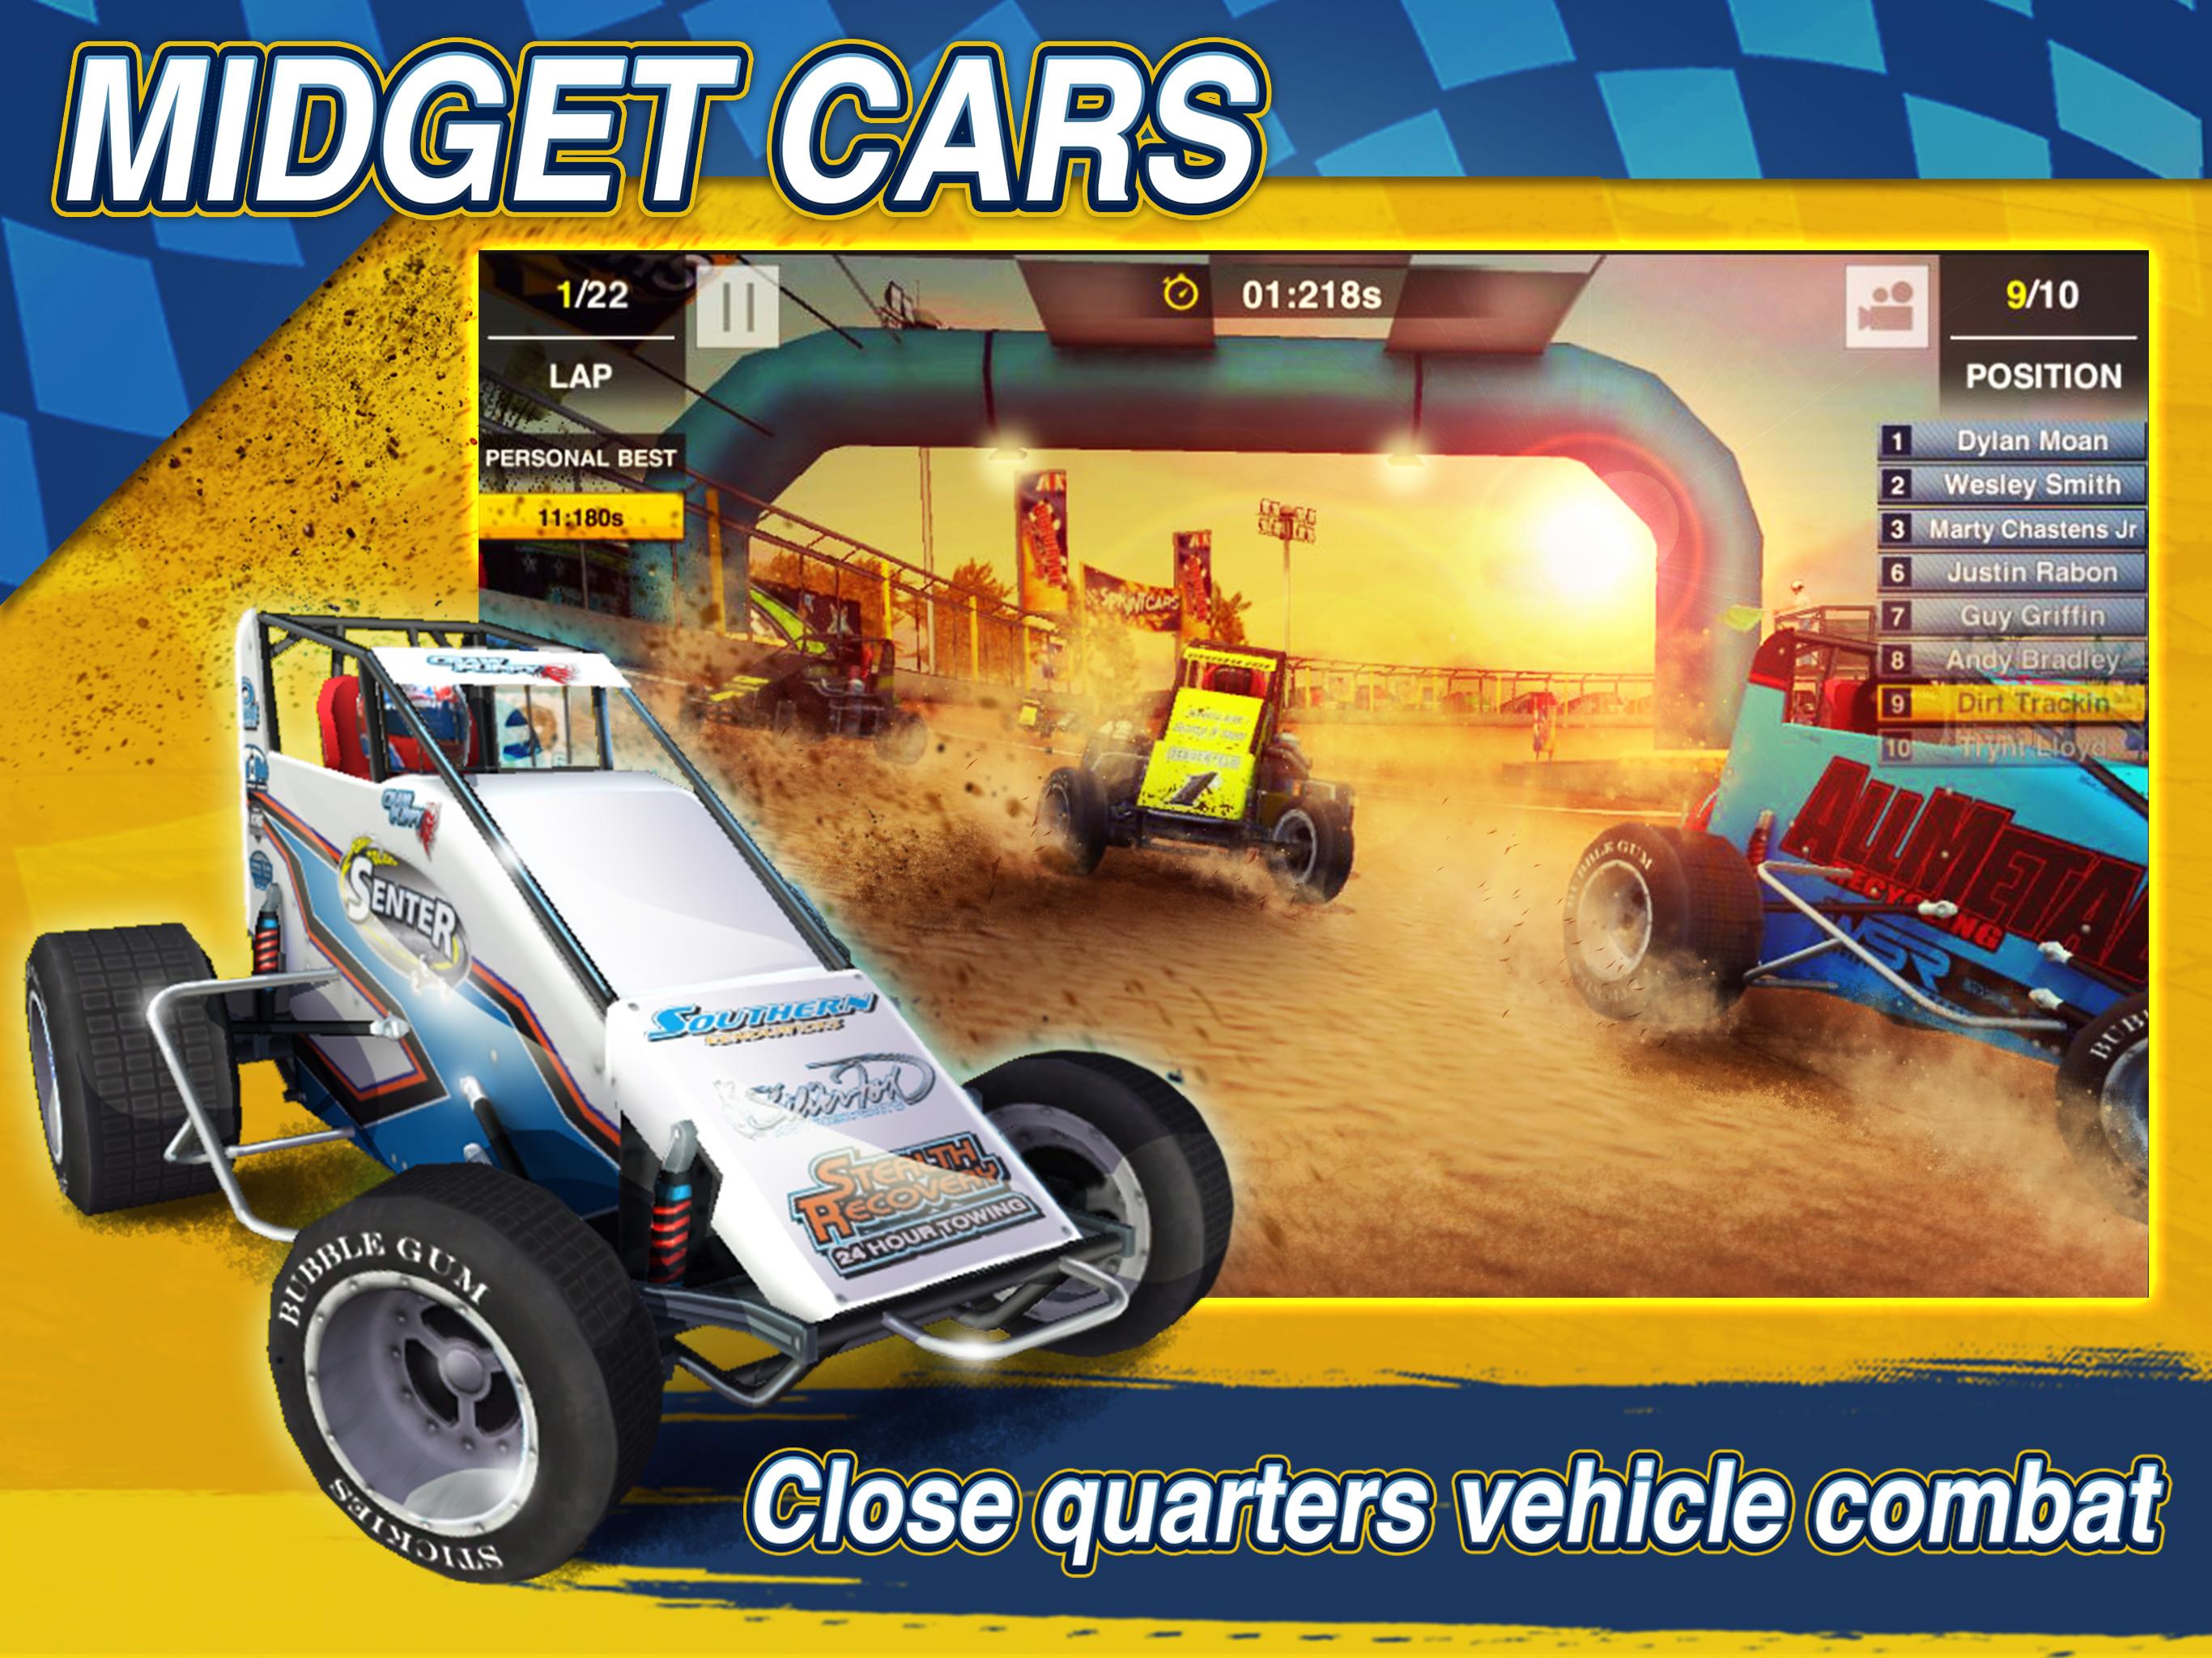 Play Dirt Trackin Sprint Cars Online